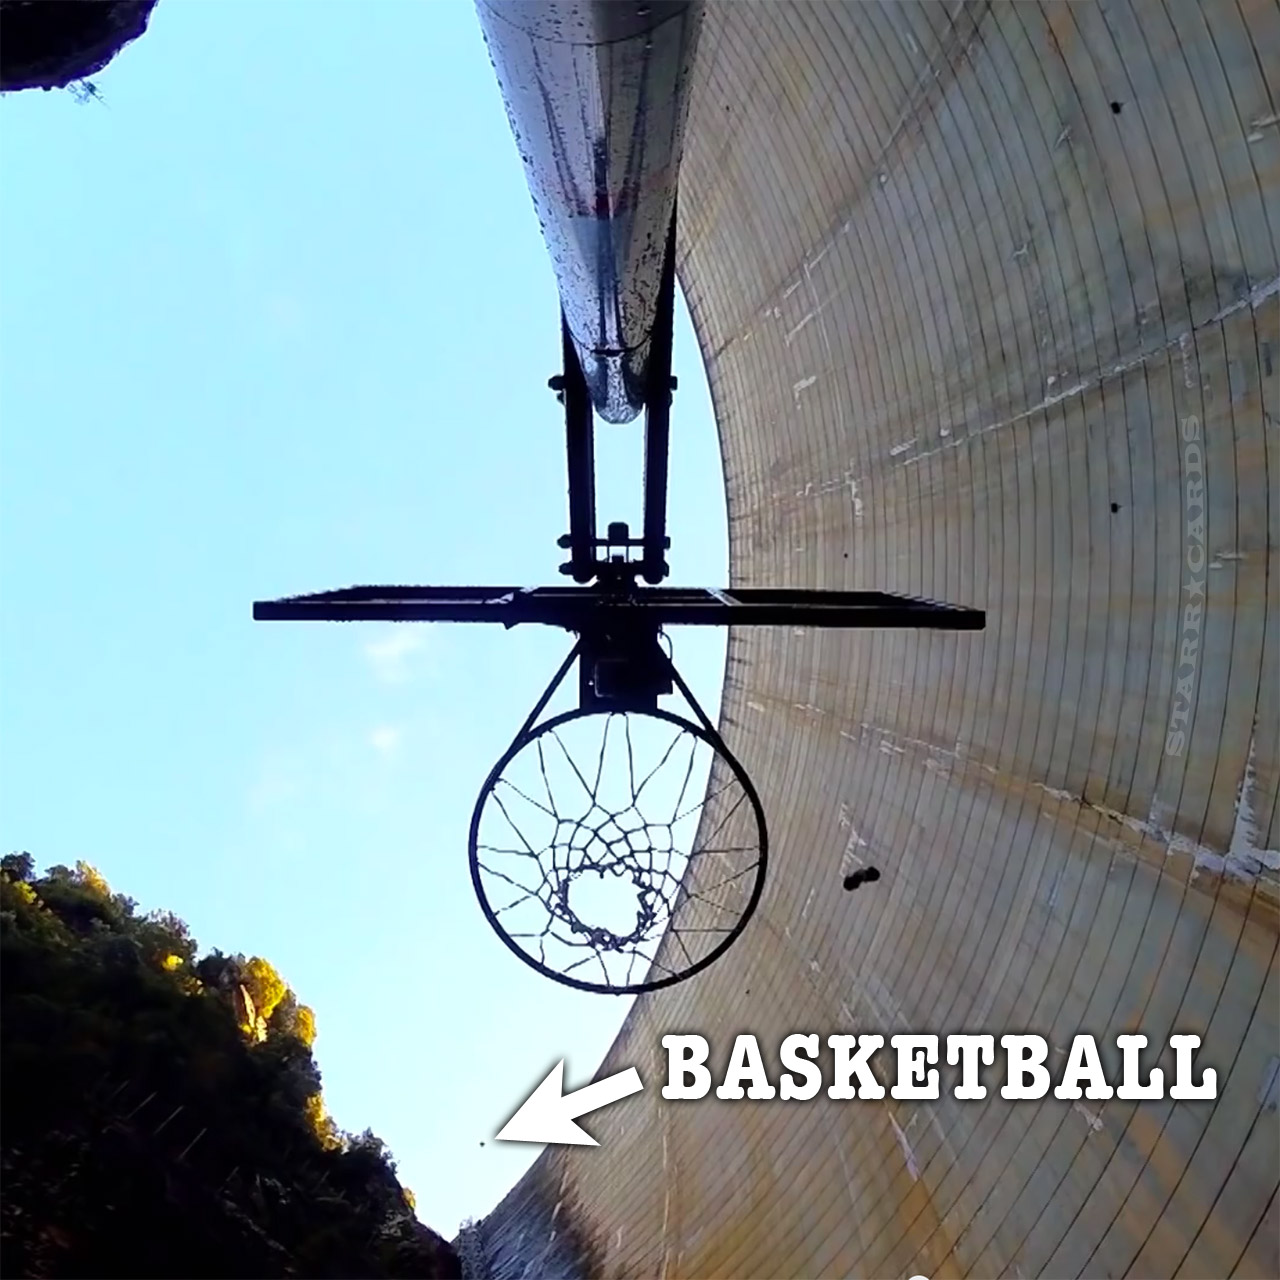 World record longest basketball shot made from Gordon Dam in Tasmania